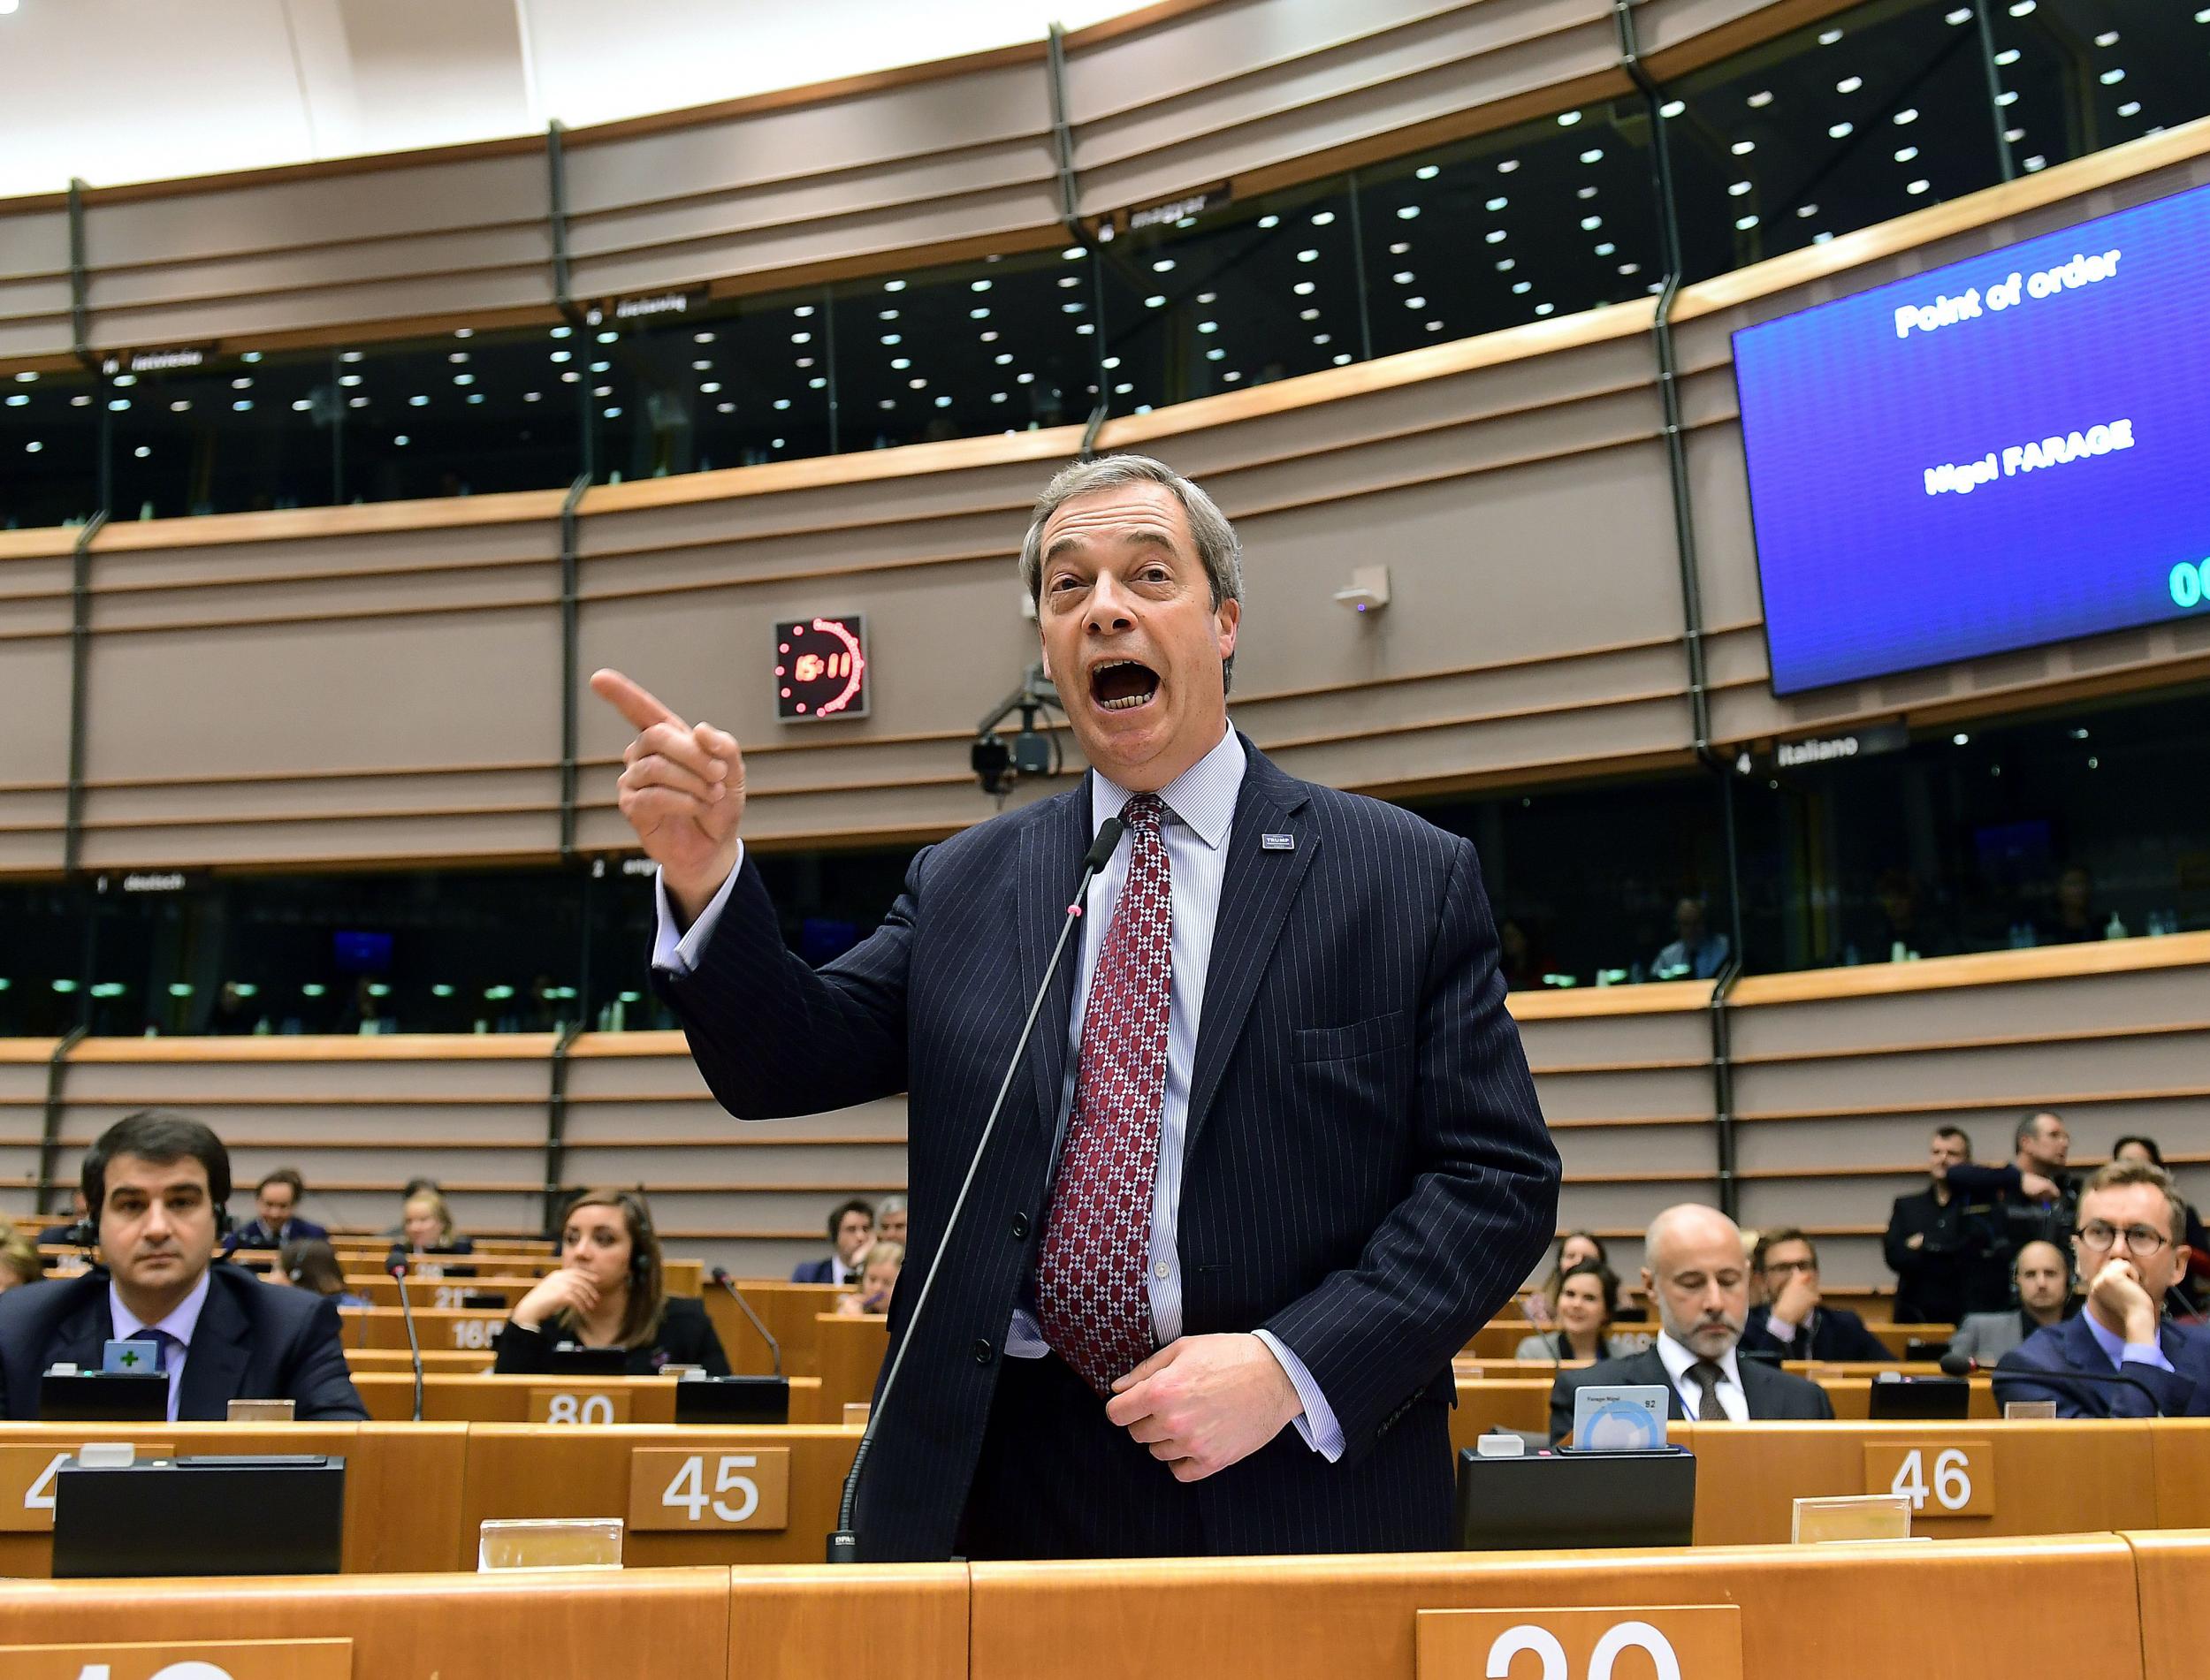 European Parliament member Nigel Farage campaigned for Brexit